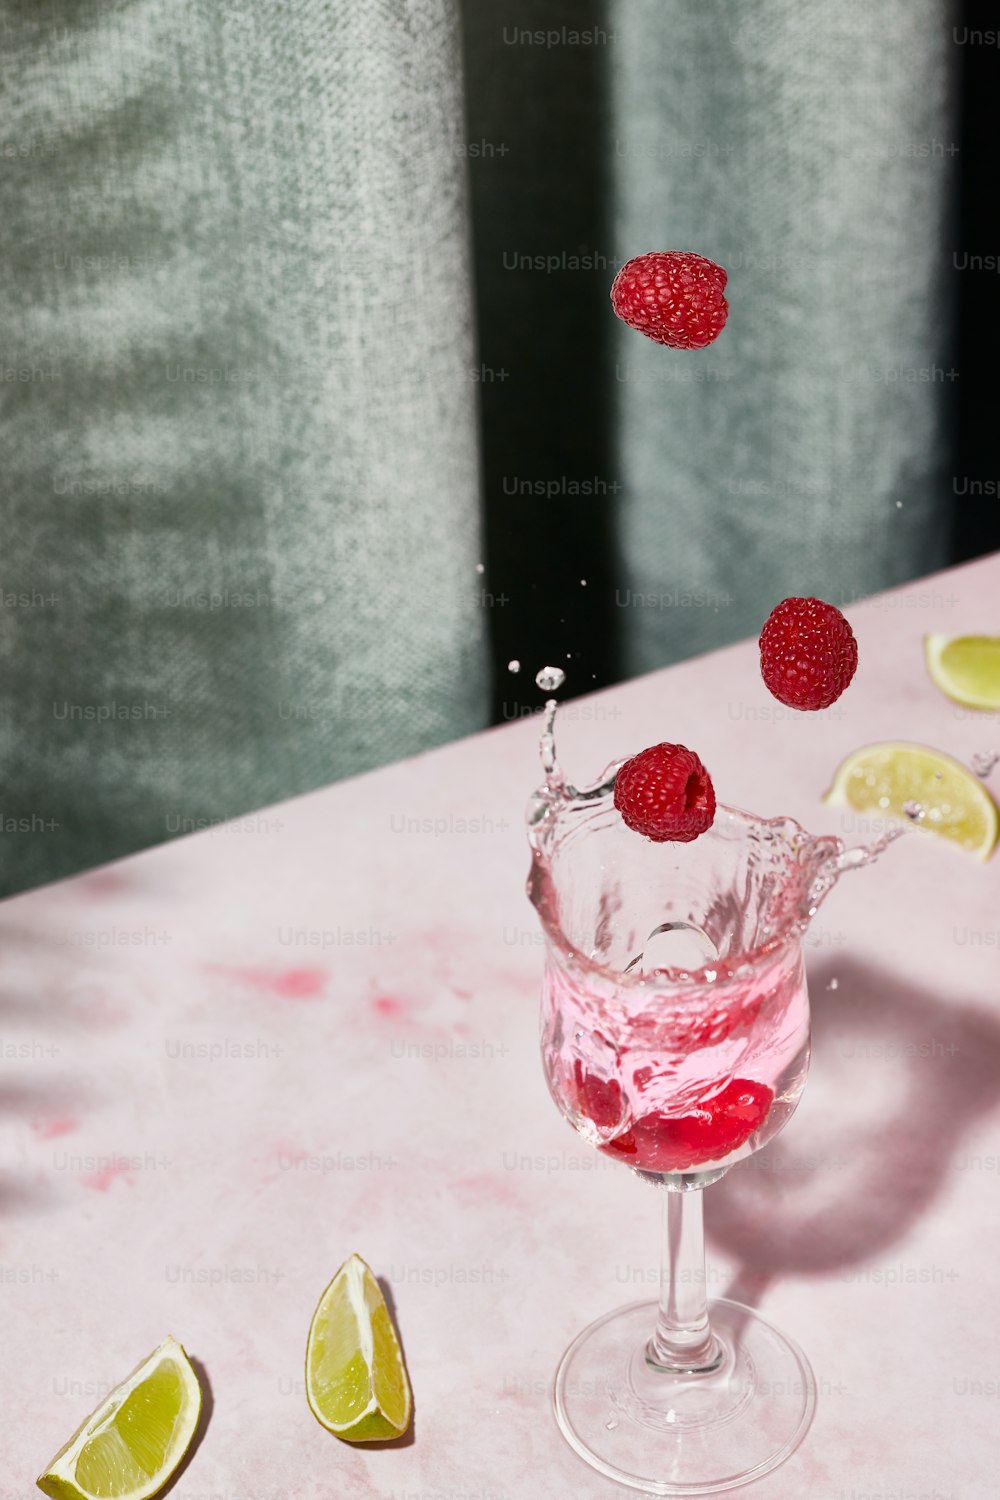 un verre rempli d’un liquide rose et garni de framboises